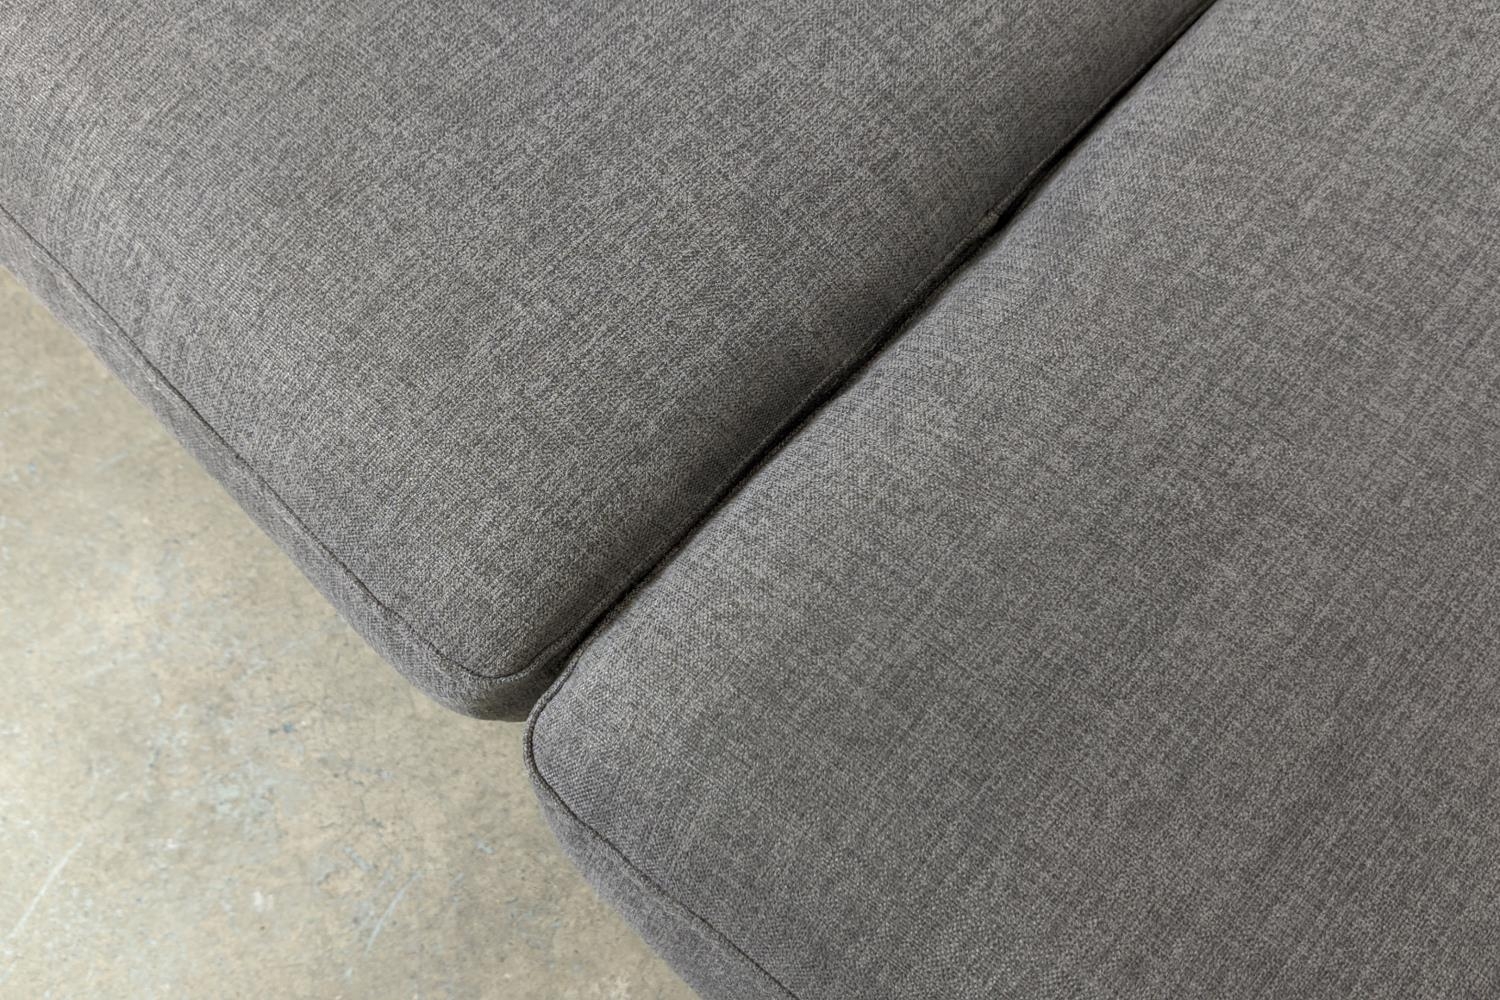 SOFA, grey upholstery, 78cm H x 188cm W. - Image 6 of 8